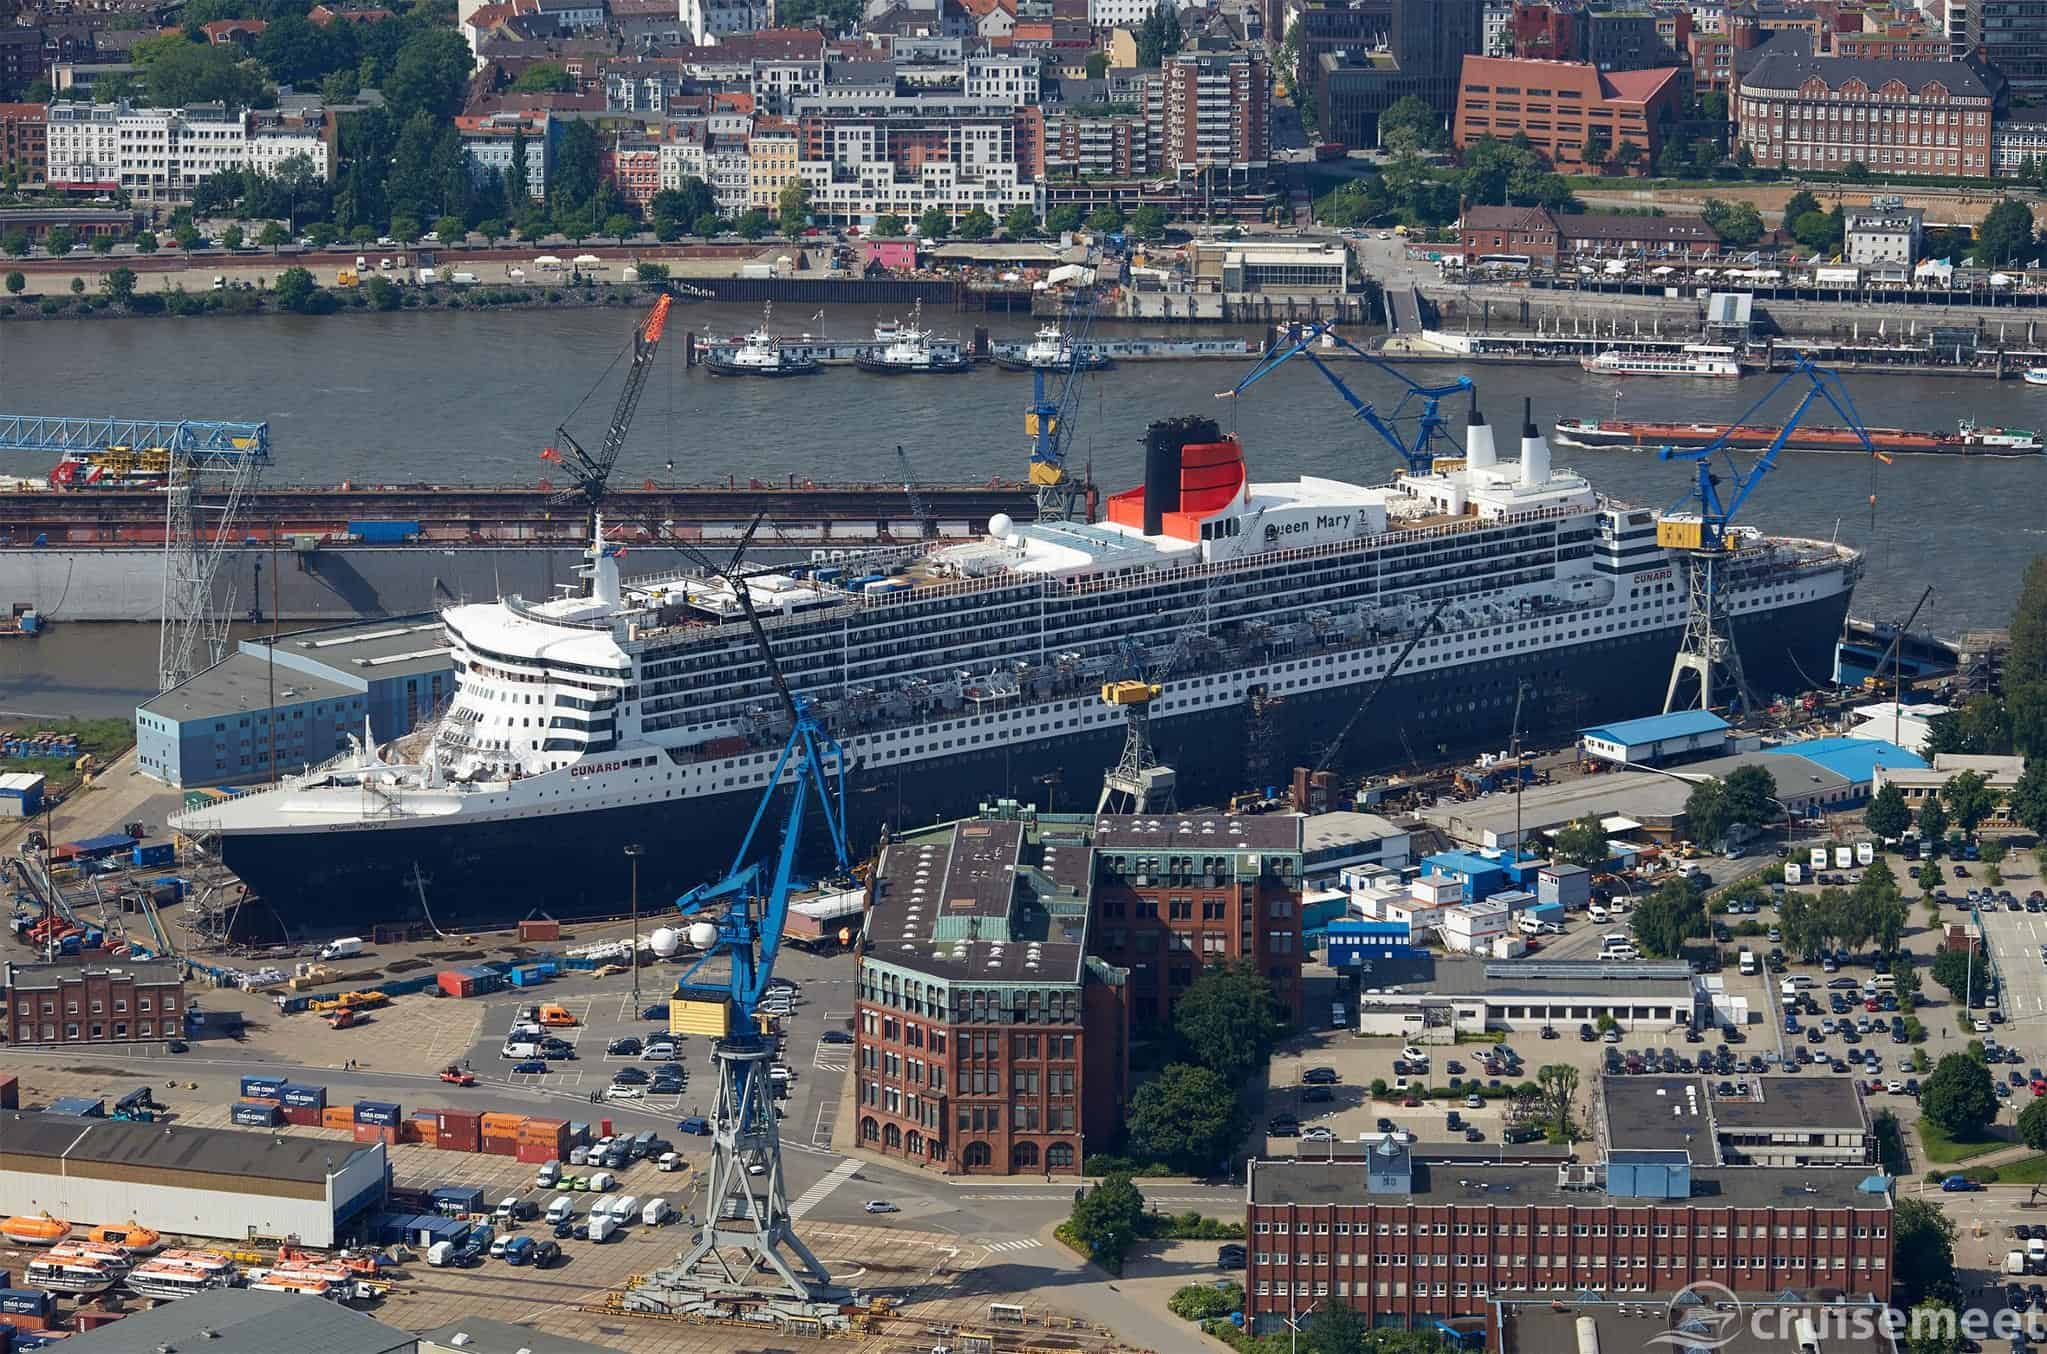 Queen Mary 2 in Drydock Elbe 17, Hamburg